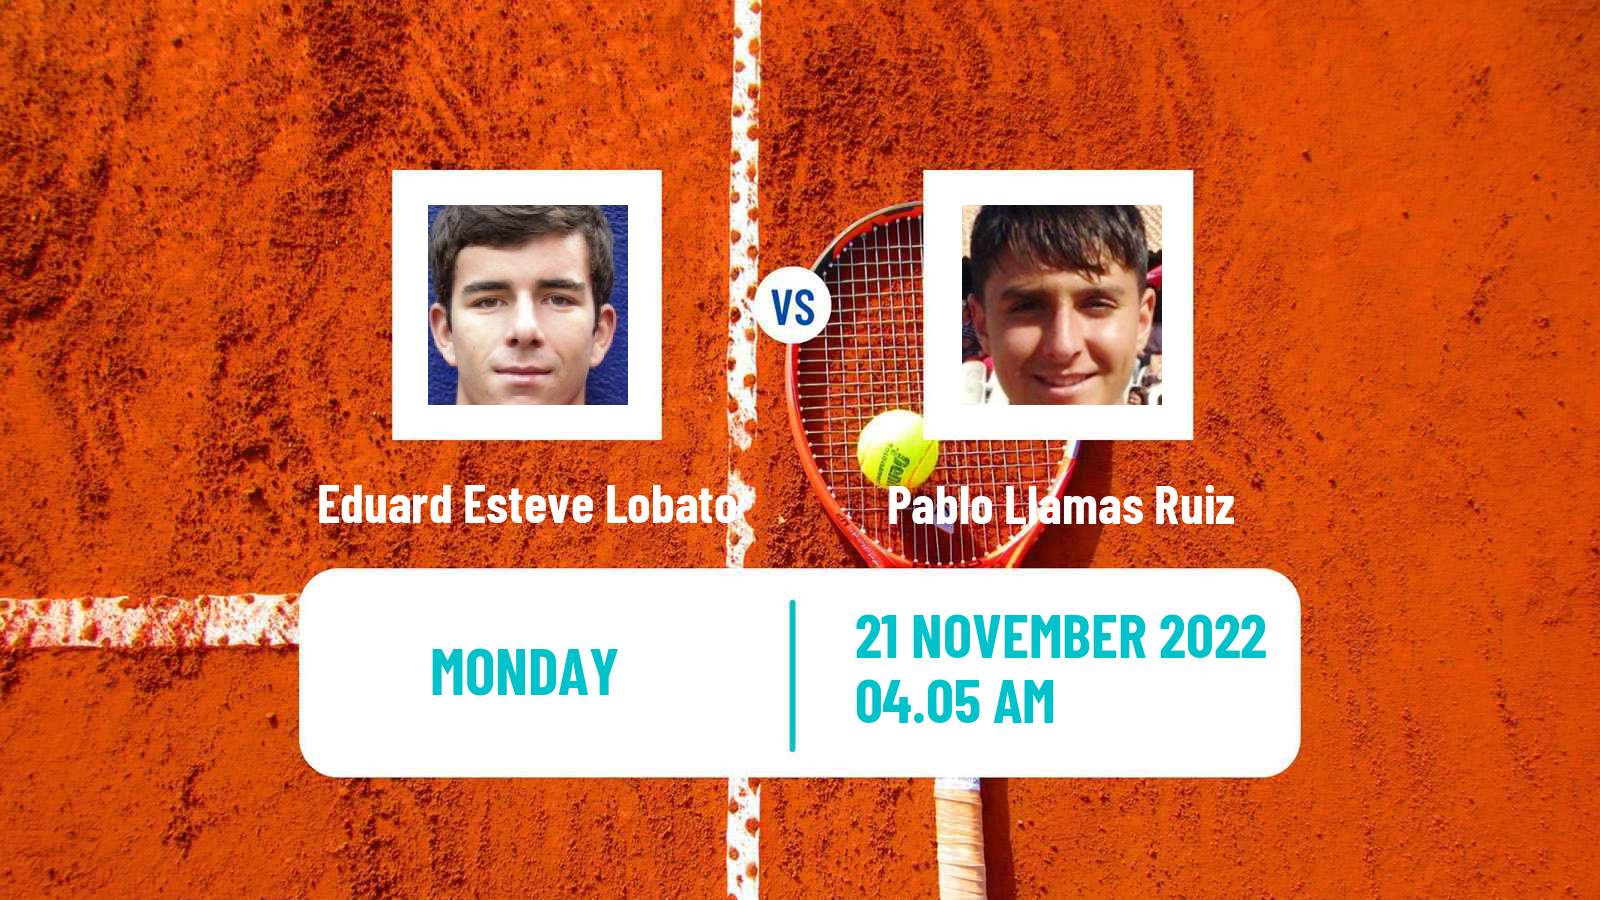 Tennis ATP Challenger Eduard Esteve Lobato - Pablo Llamas Ruiz